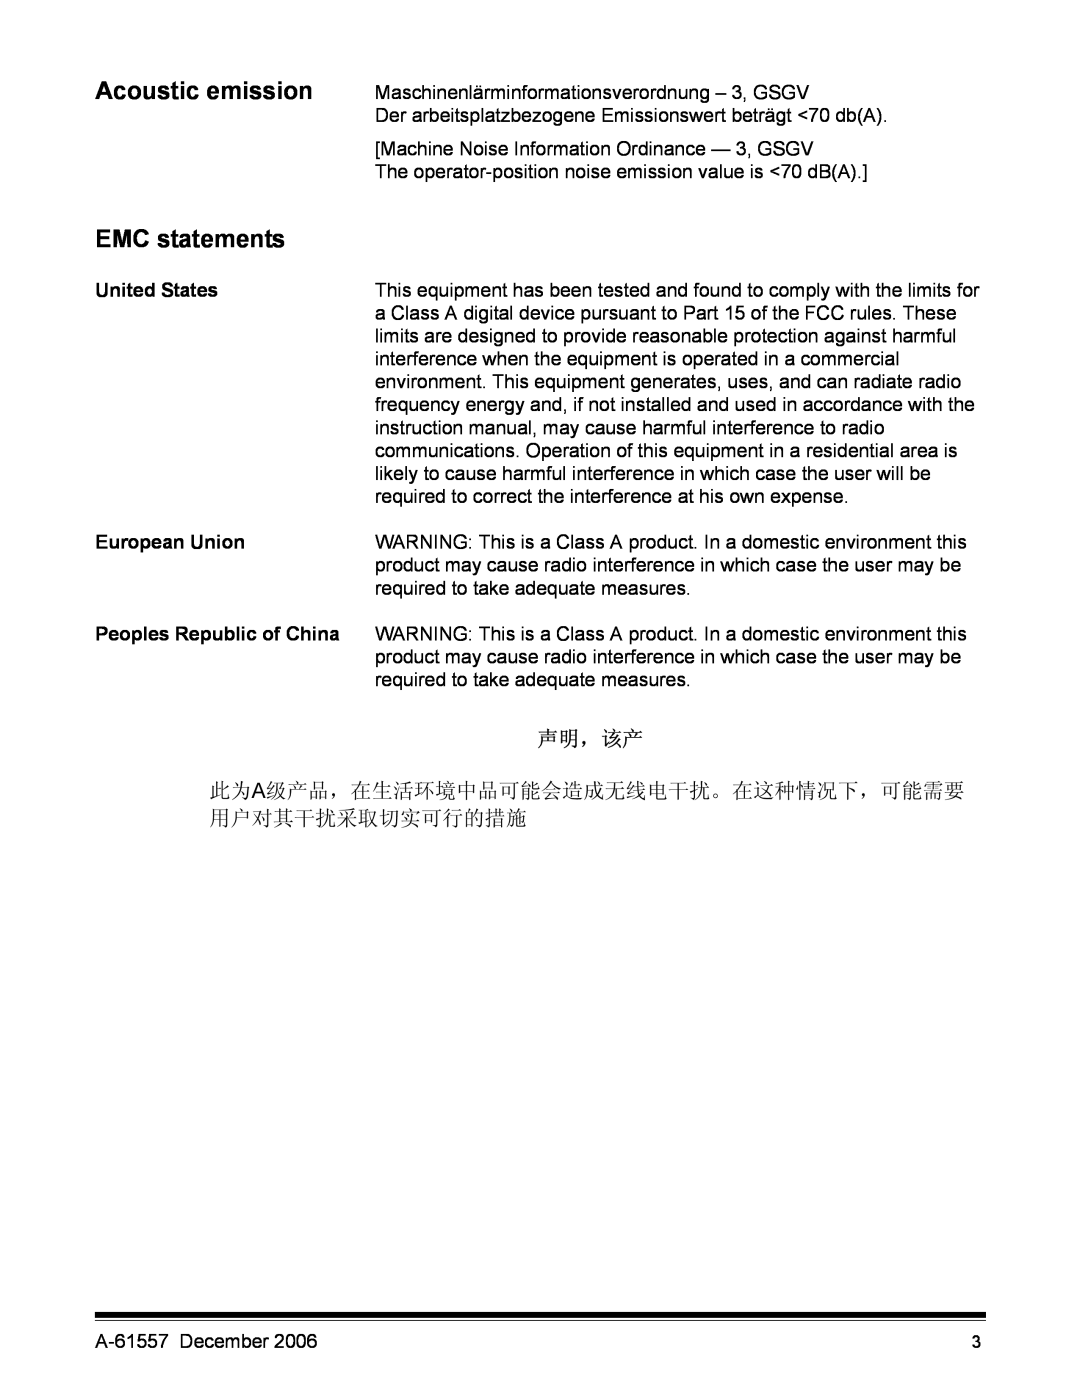 Kodak A-61557 manual Acoustic emission EMC statements, United States, European Union, Peoples Republic of China, 声明，该产 